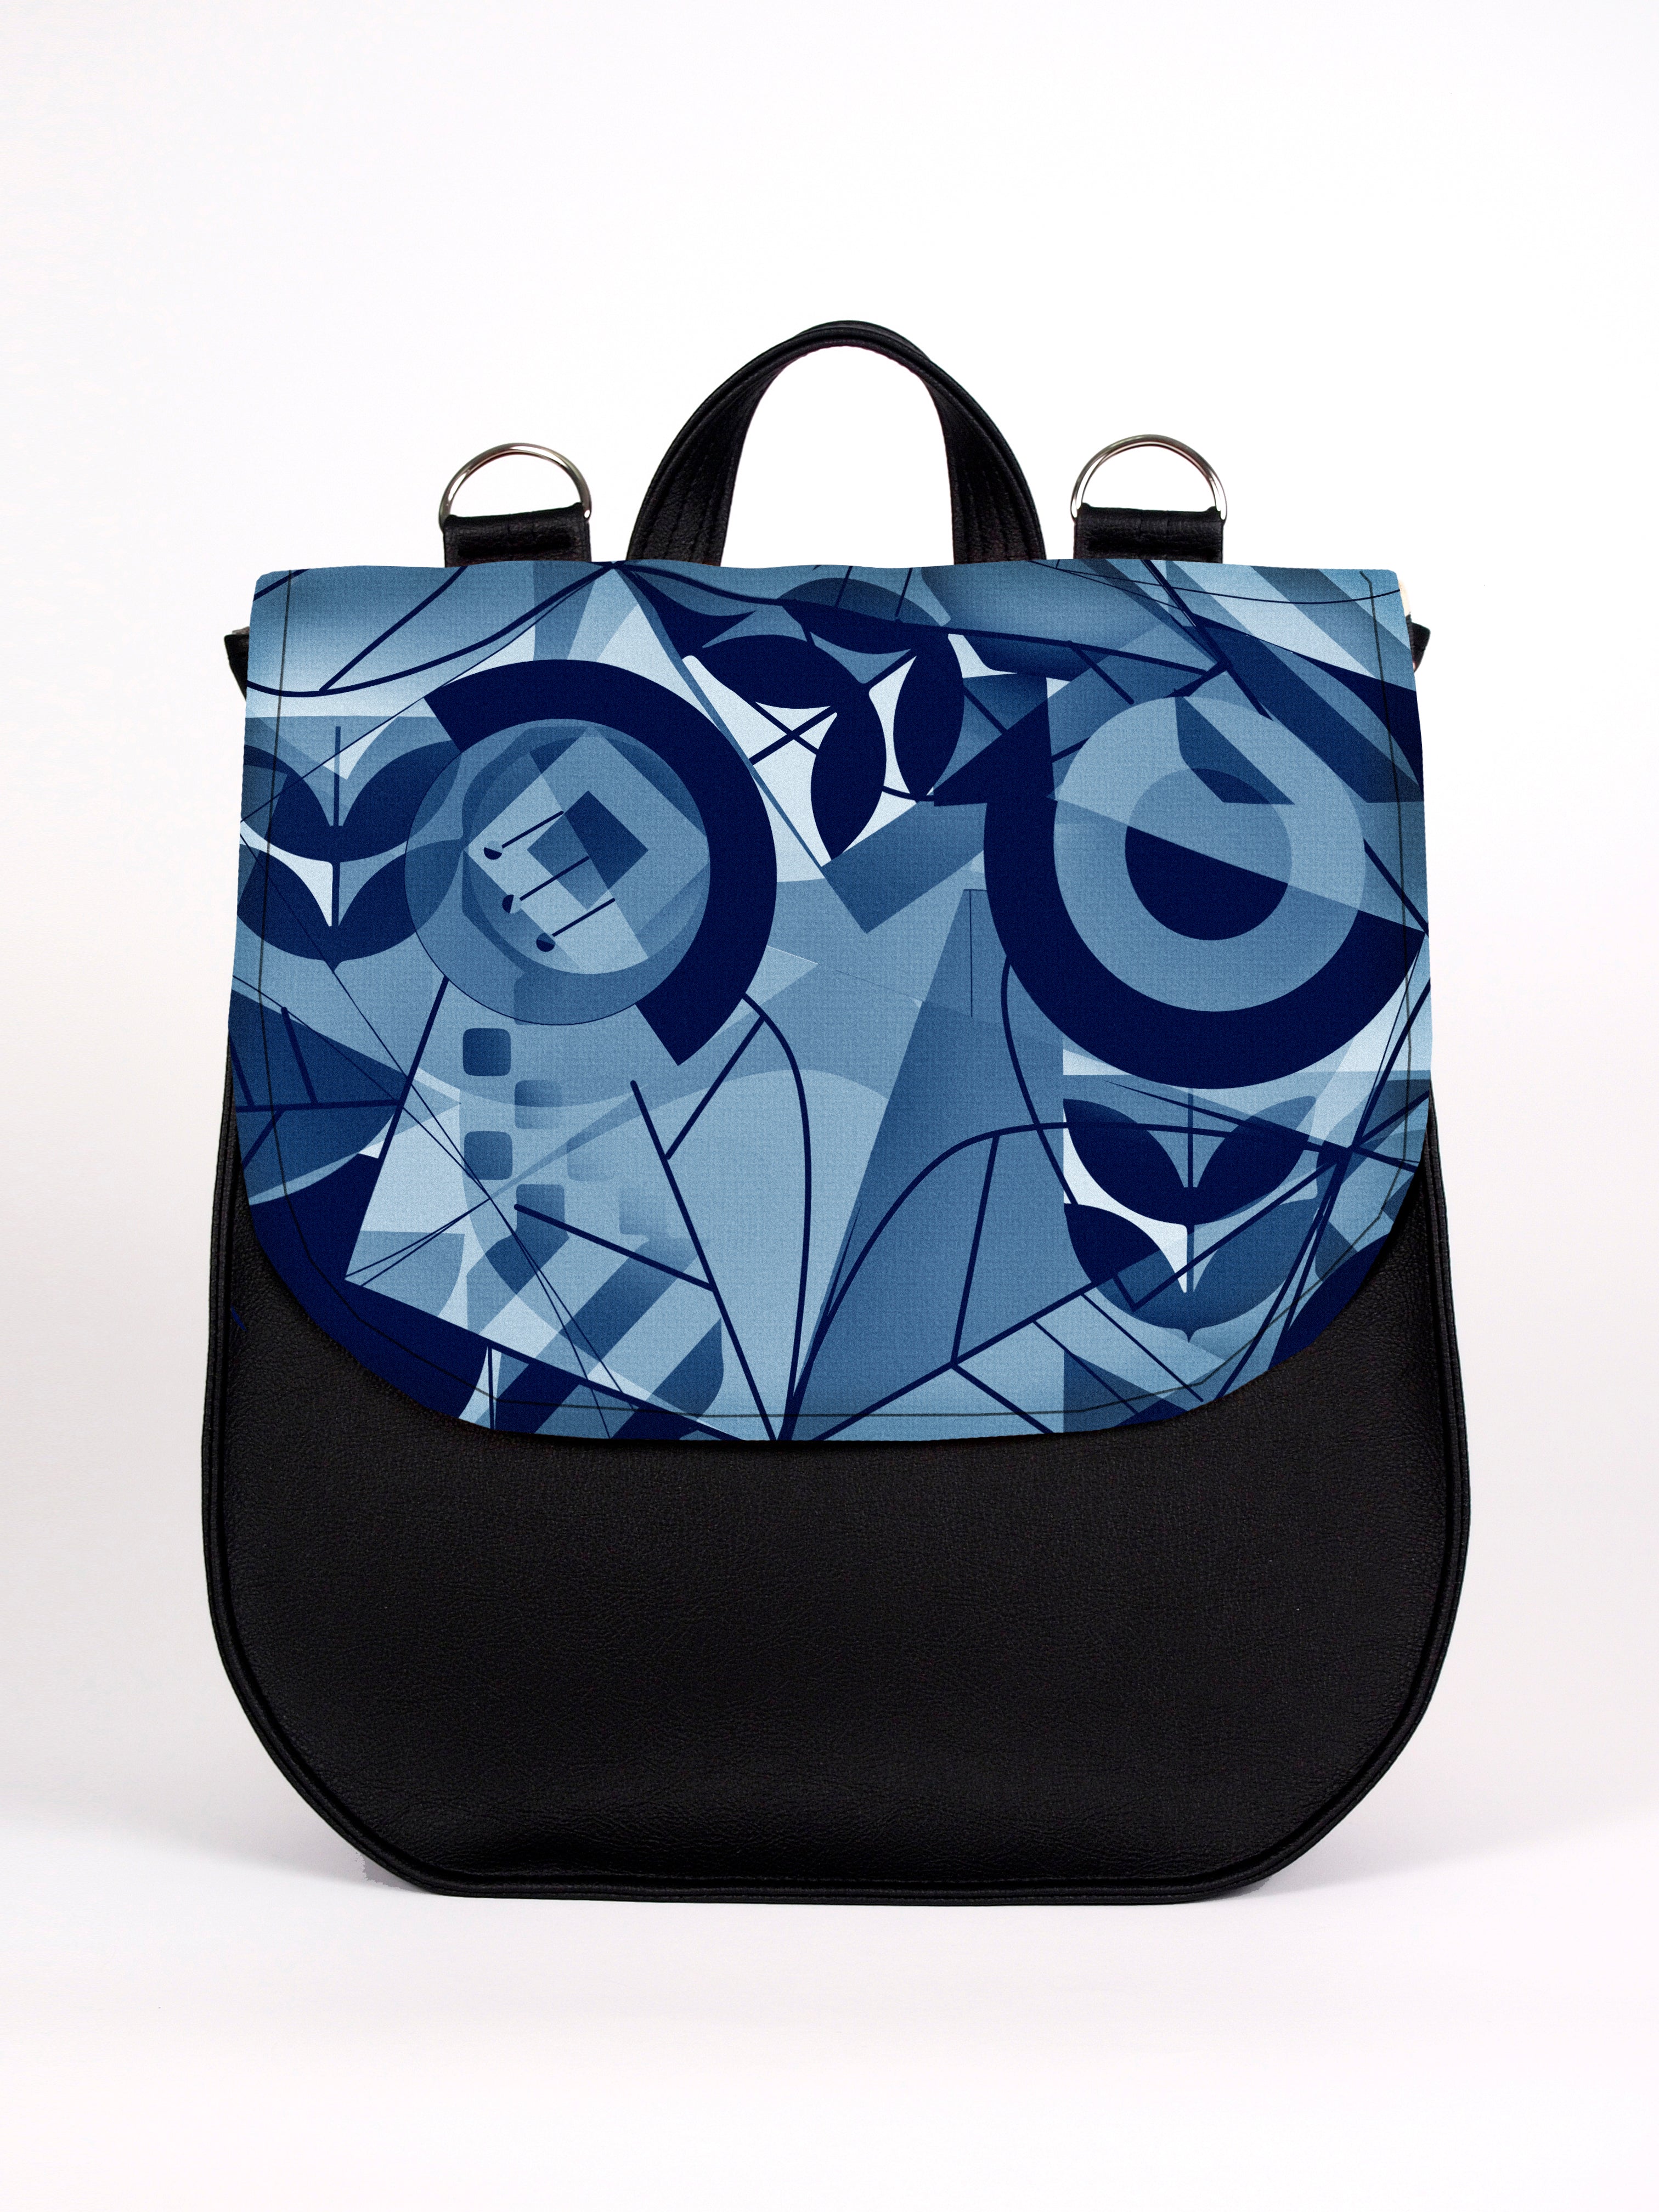 Bardo backpack&bag - Geometric flowers in blue - Premium bardo backpack&bag from BARDO ART WORKS - Just lvart bag, backpack, bag, black, floral, flowers, gift, green, handemade, messenger, nature, red, urban style, vegan leather, woman85.00! Shop now at BARDO ART WORKS